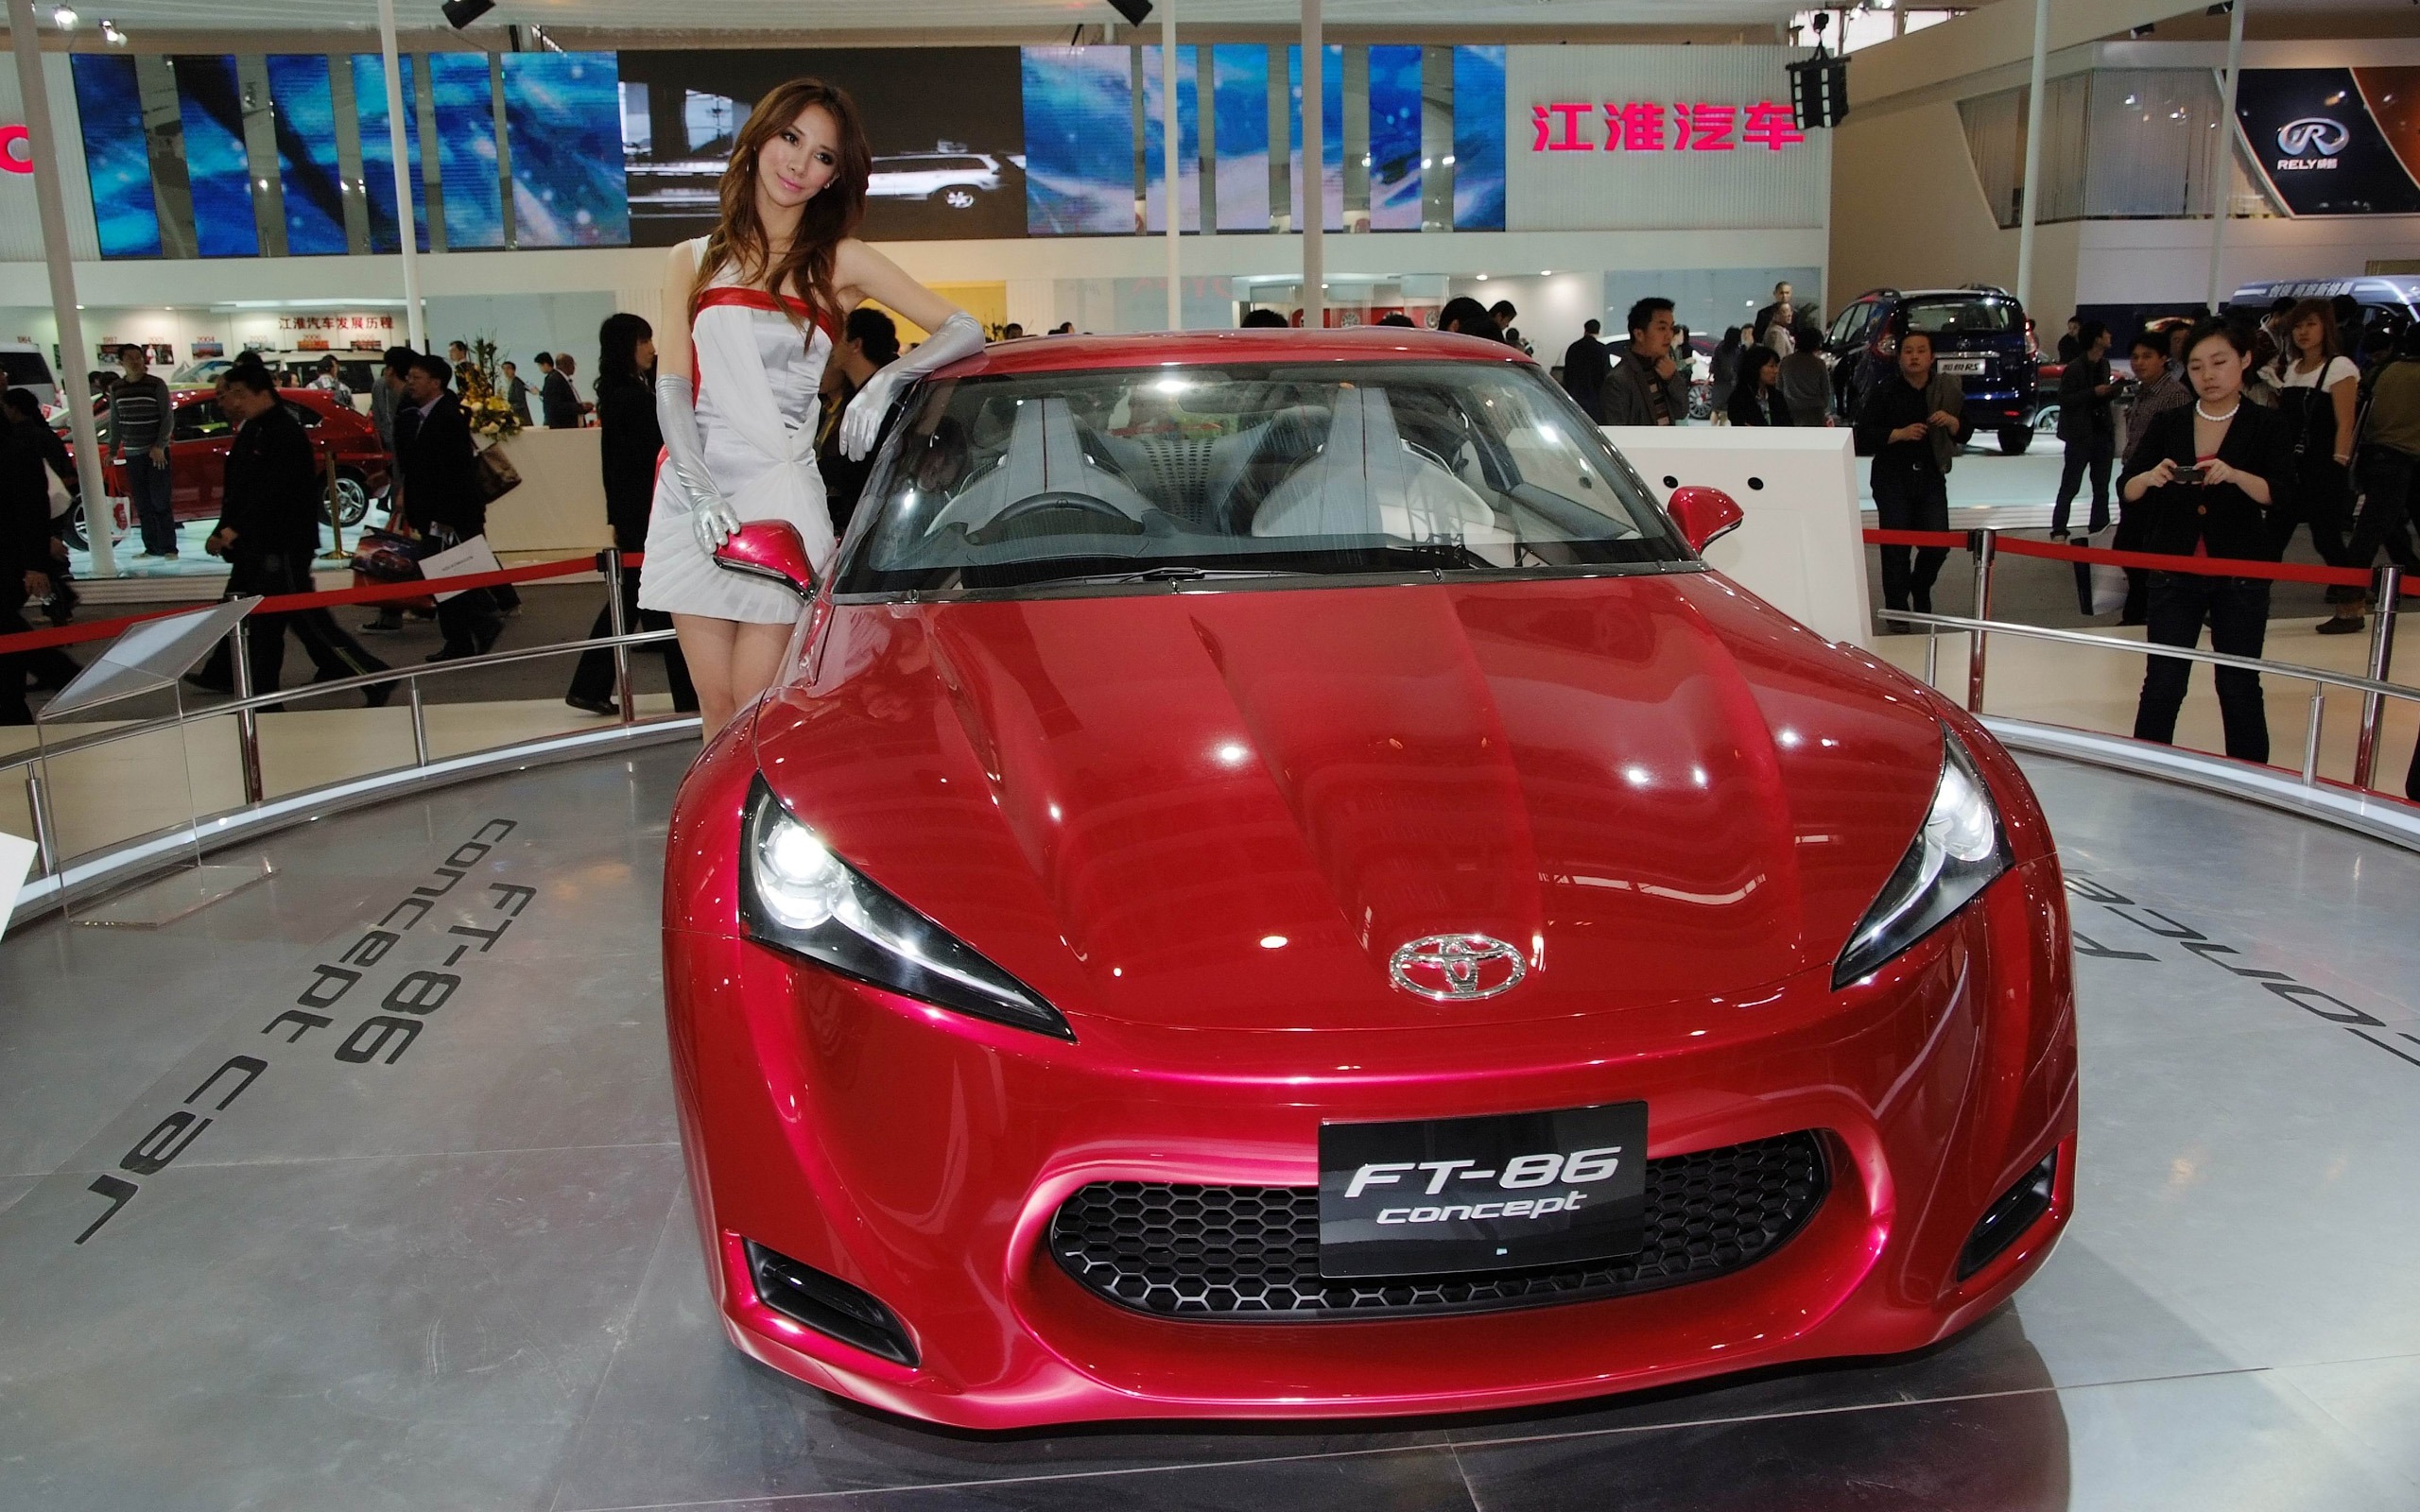 2010 Salón Internacional del Automóvil de Beijing Heung Che belleza (obras barras de refuerzo) #23 - 2560x1600